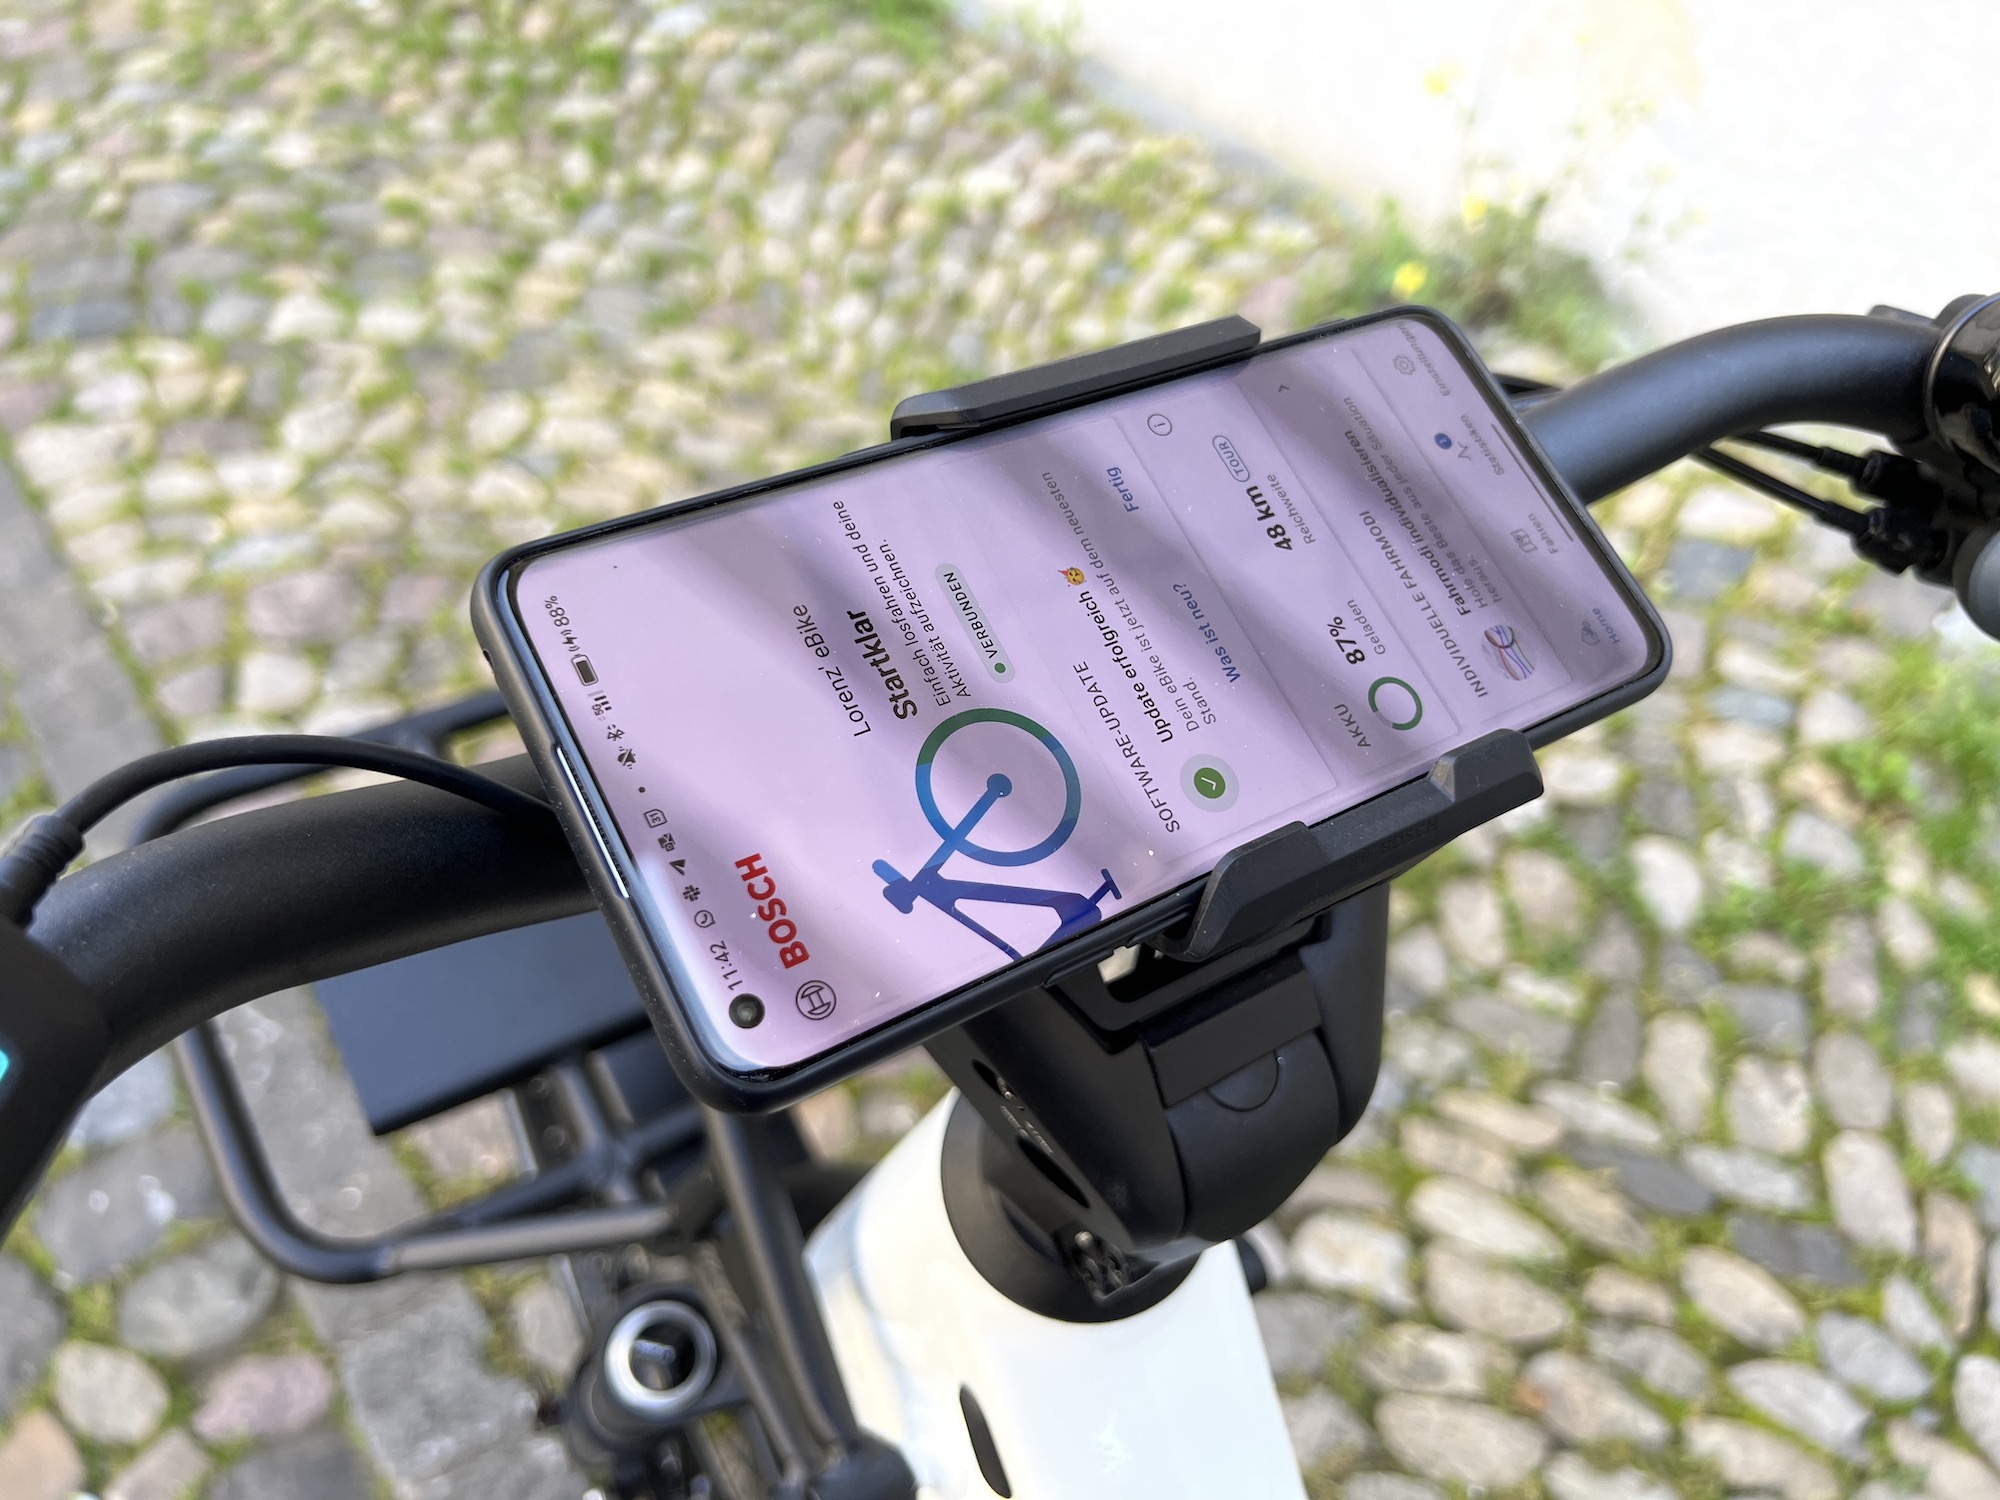 Bosch Kiox 300: Smart System jetzt mit Navigationsfunktion